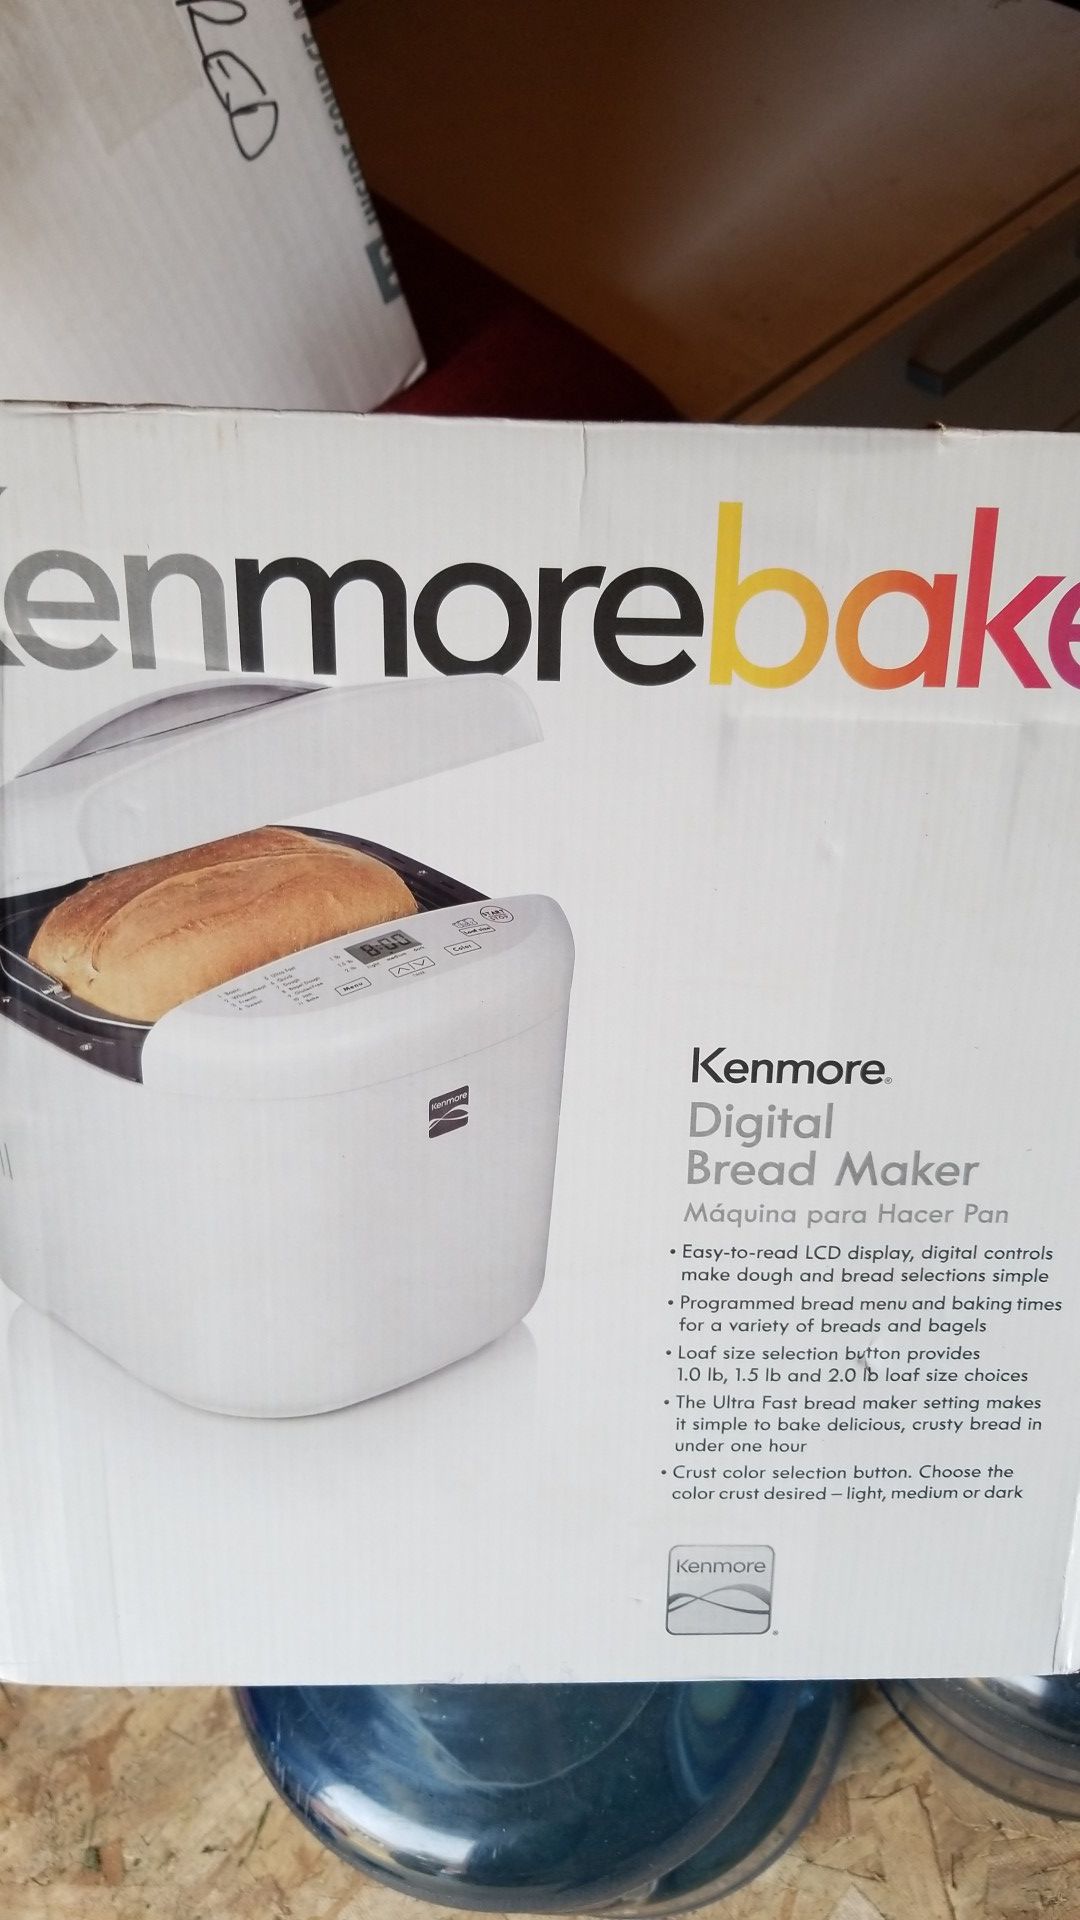 Kenmore bake digital bread maker